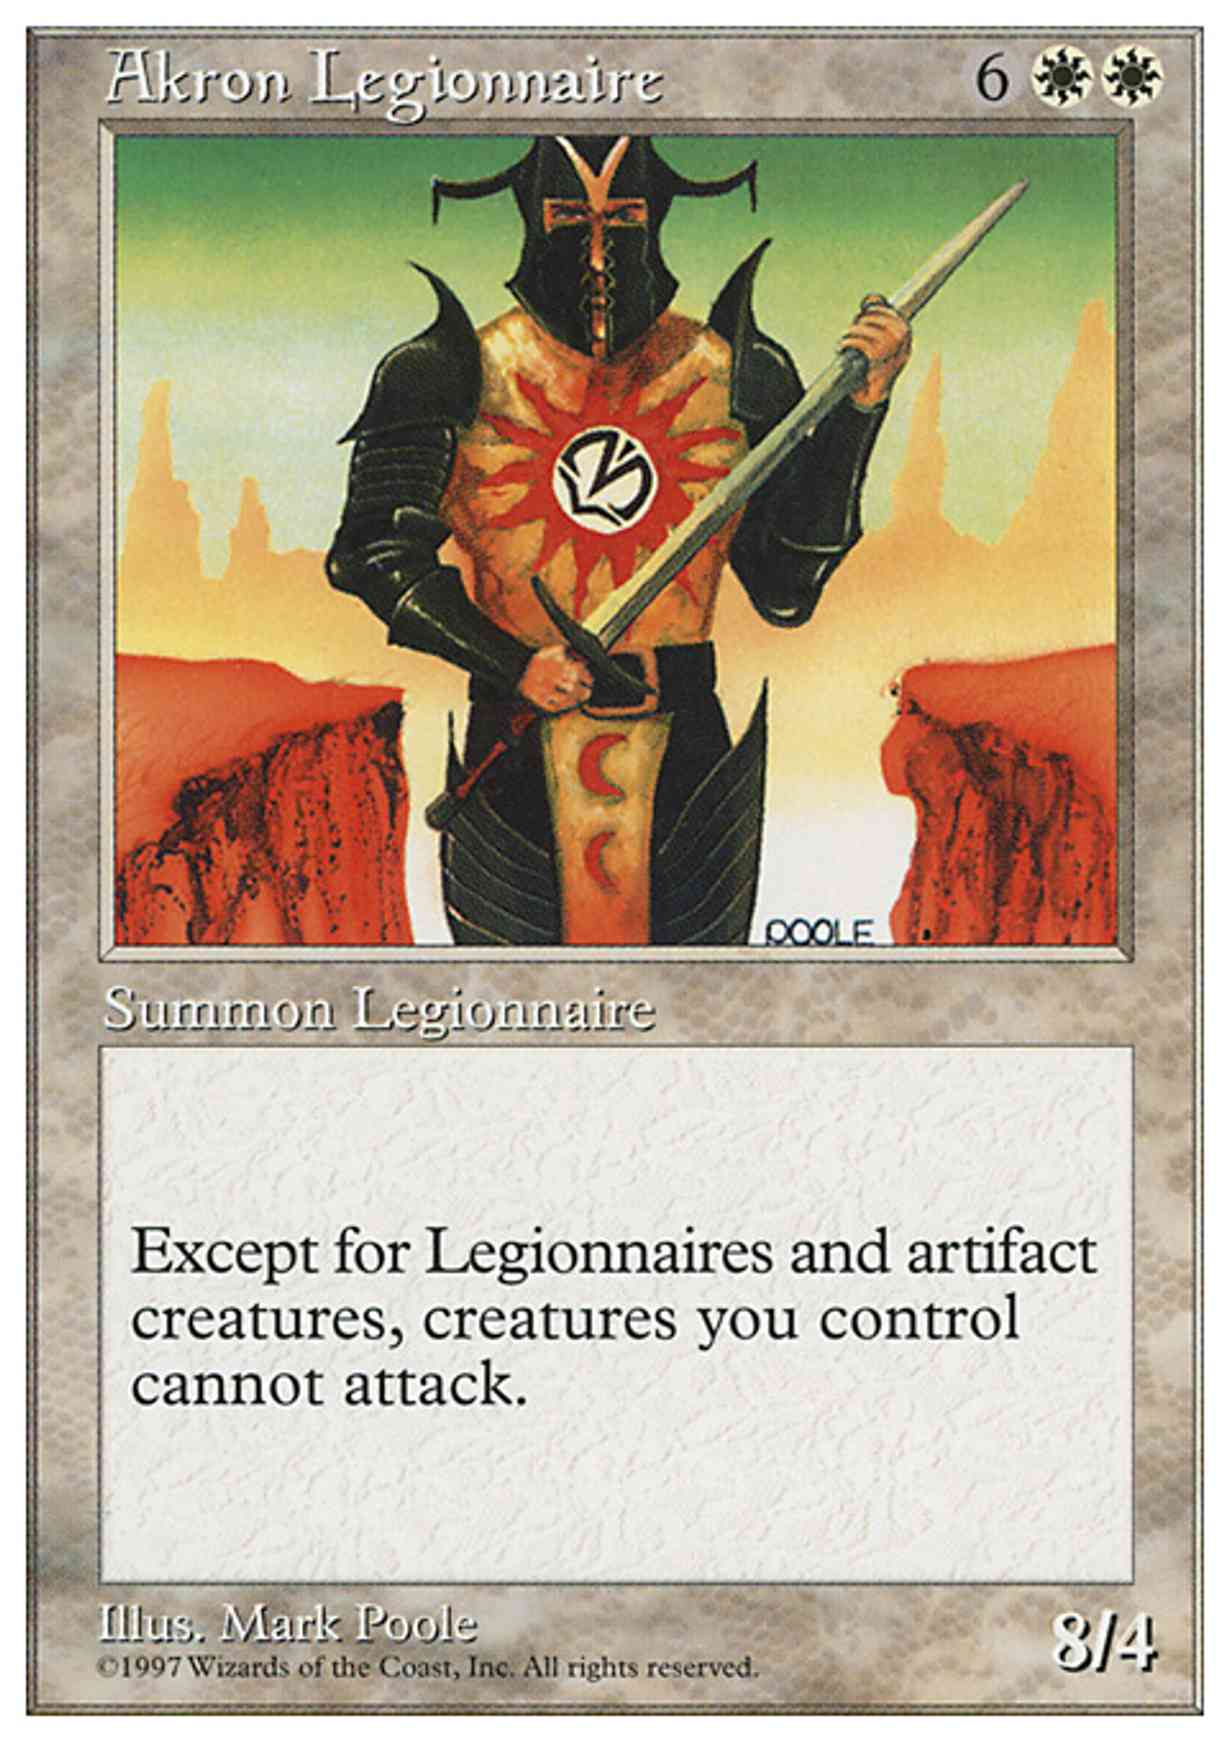 Akron Legionnaire magic card front